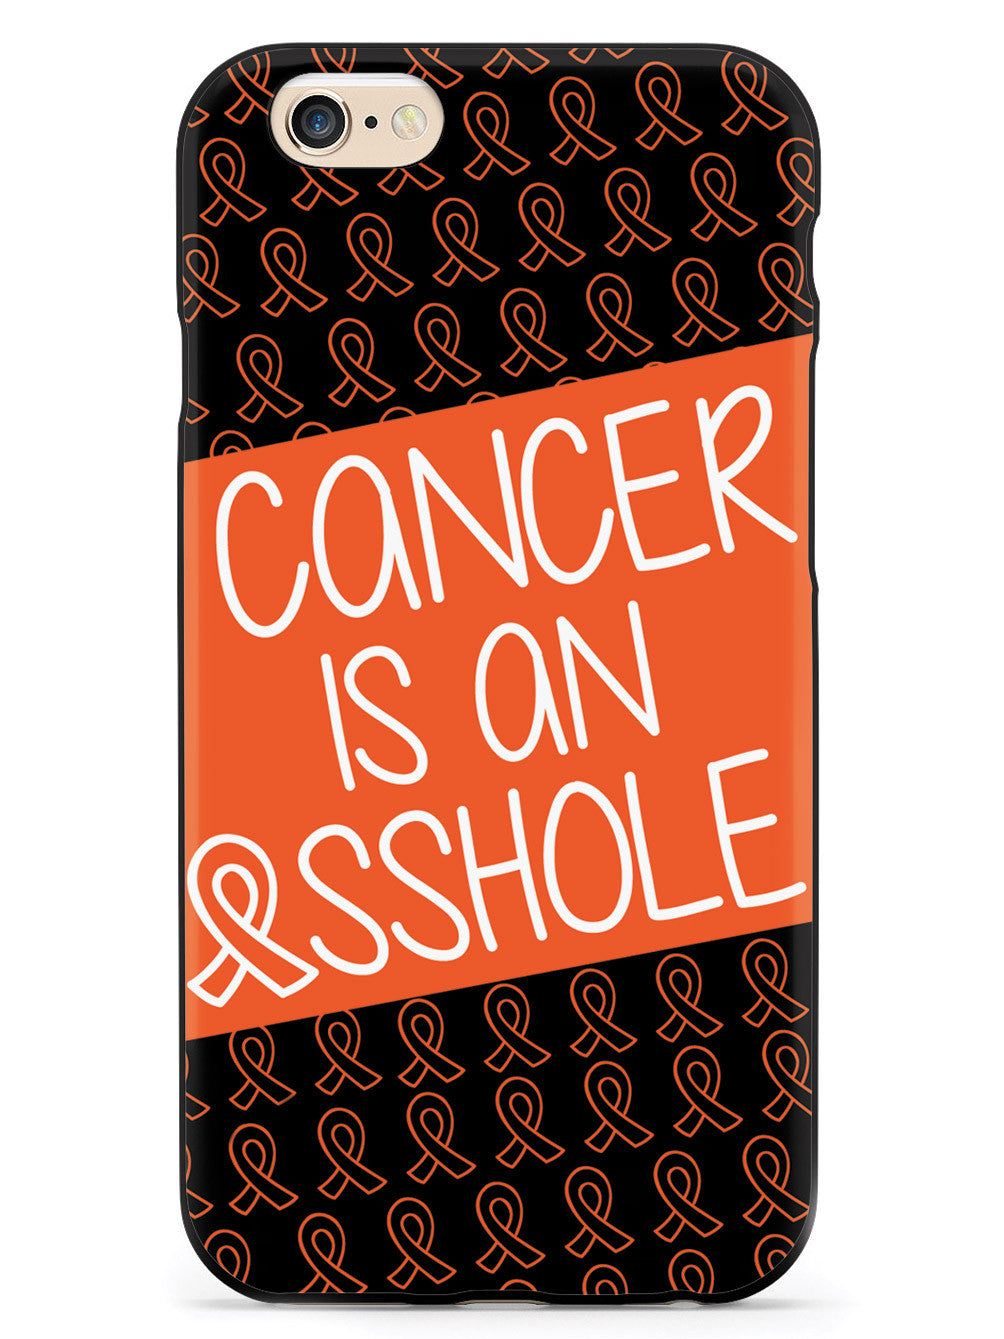 Cancer is an ASSHOLE Orange Case